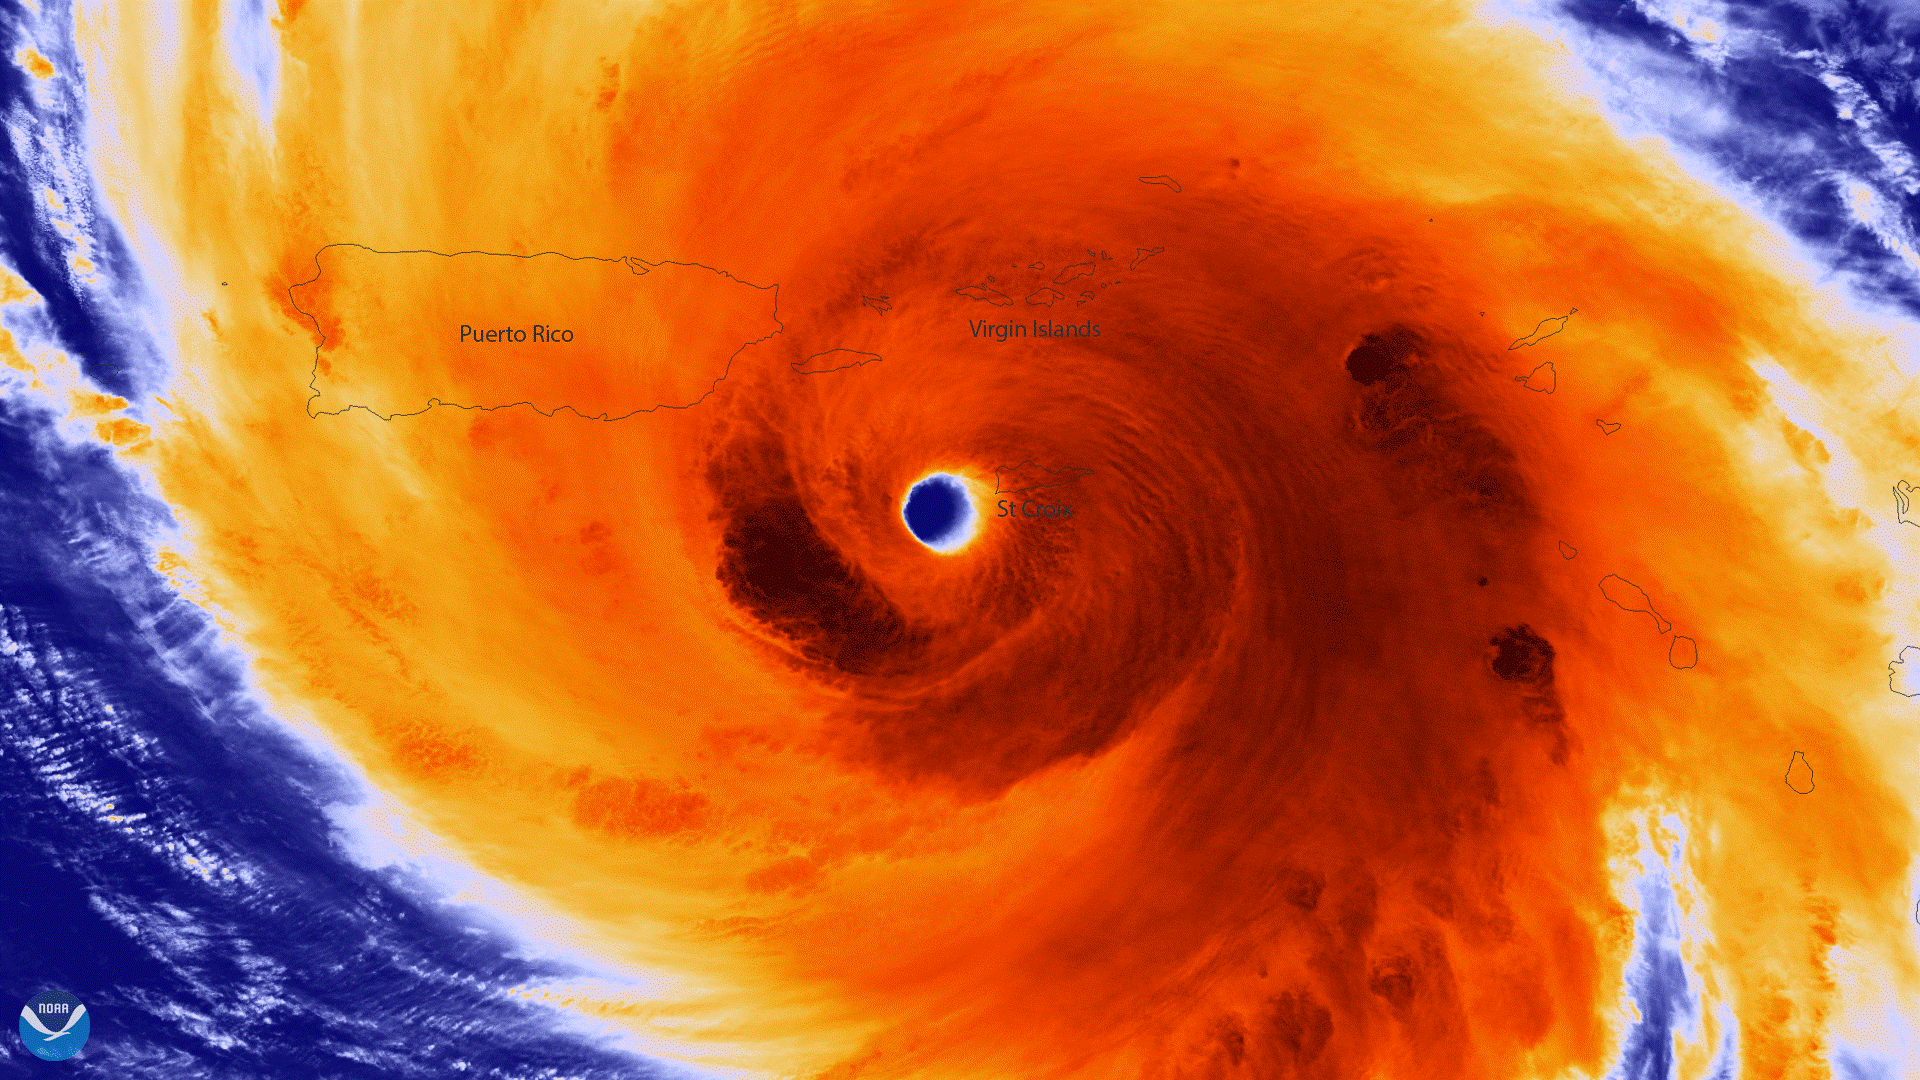 Radar depiction of Hurricane Maria over Puerto Rico